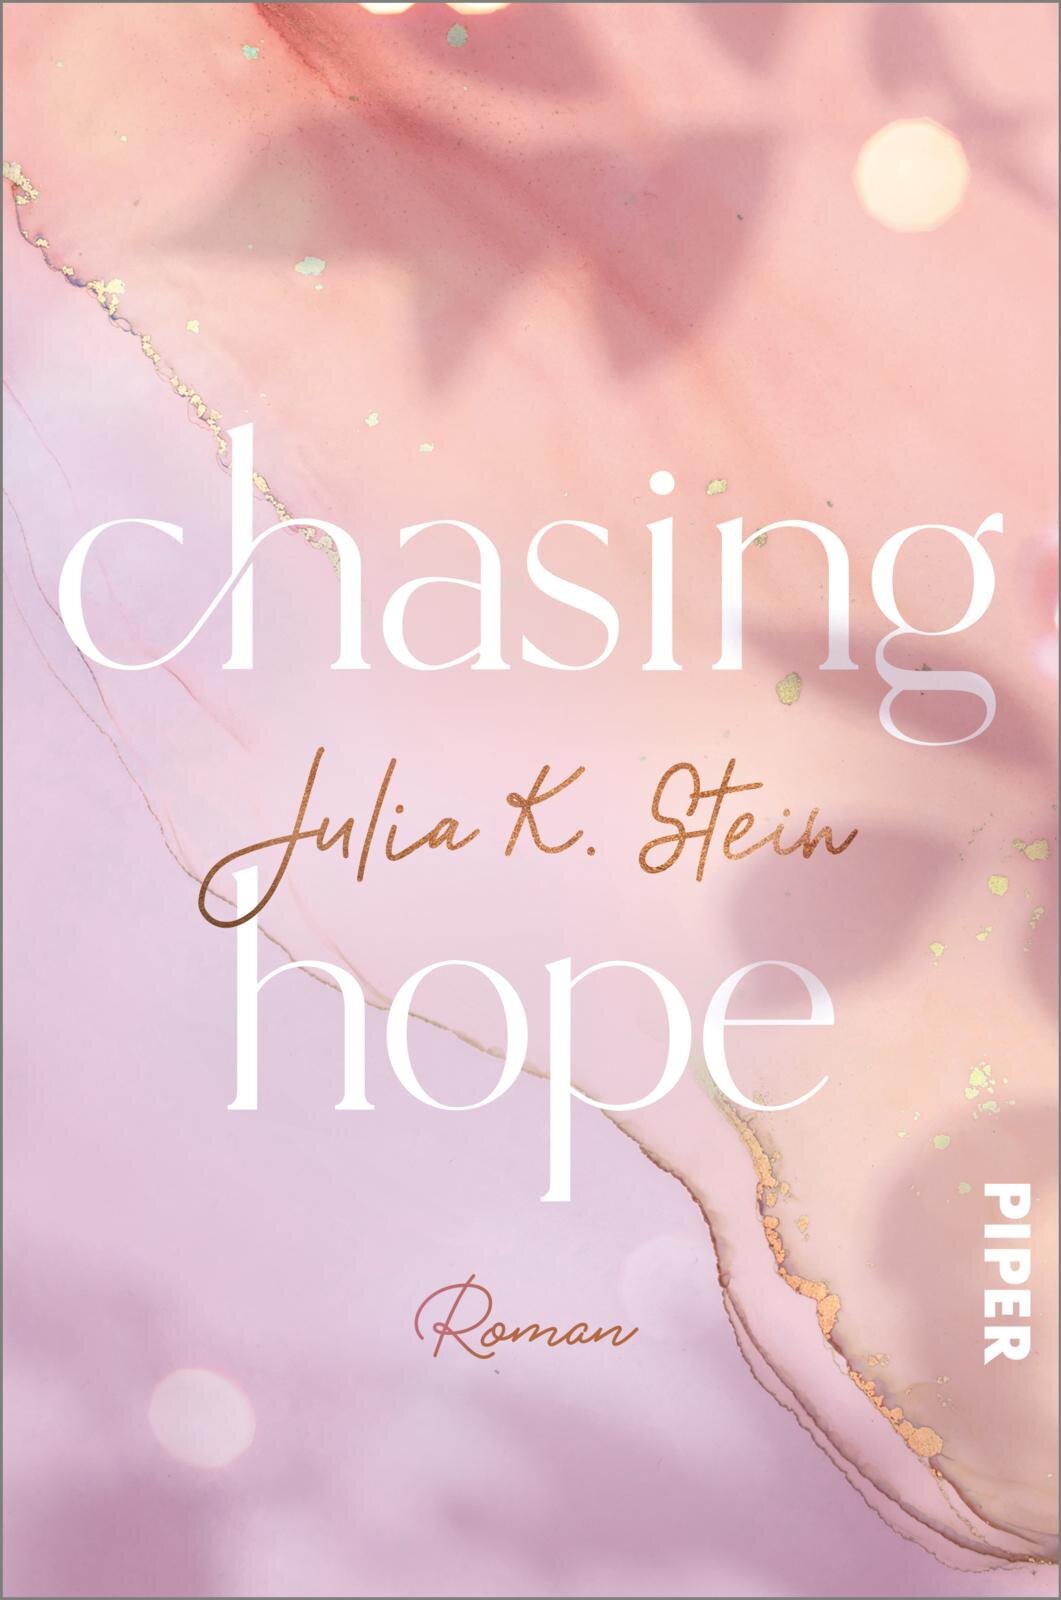 chasing hope cover.jpeg